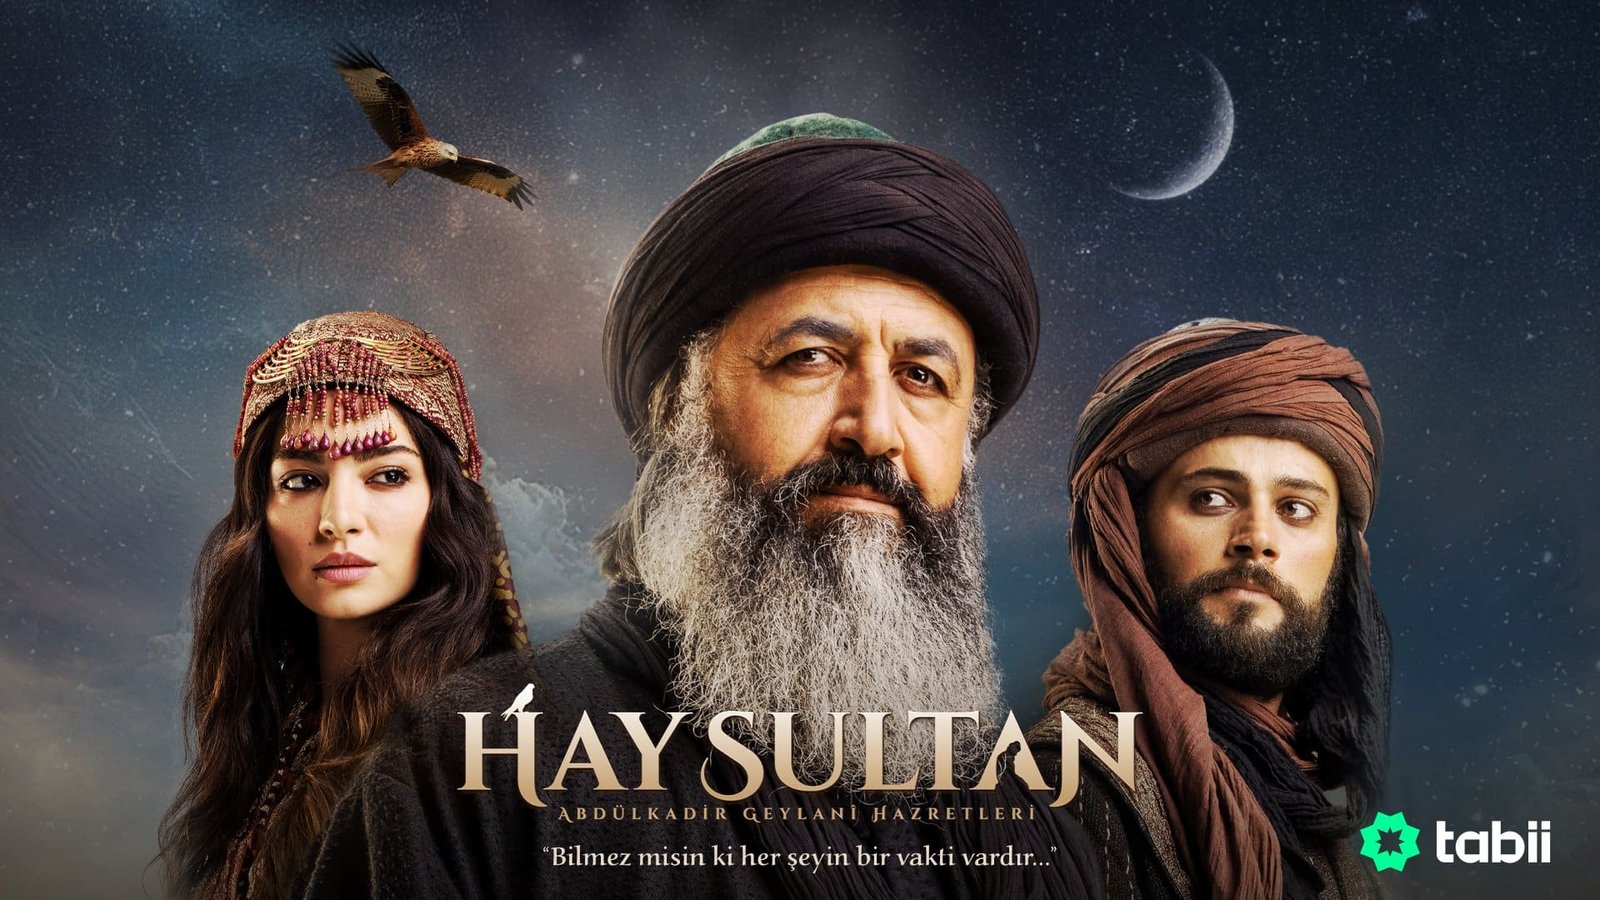 Hay Sultan Abdulkadir Geylani Episode 8 English Subtitles